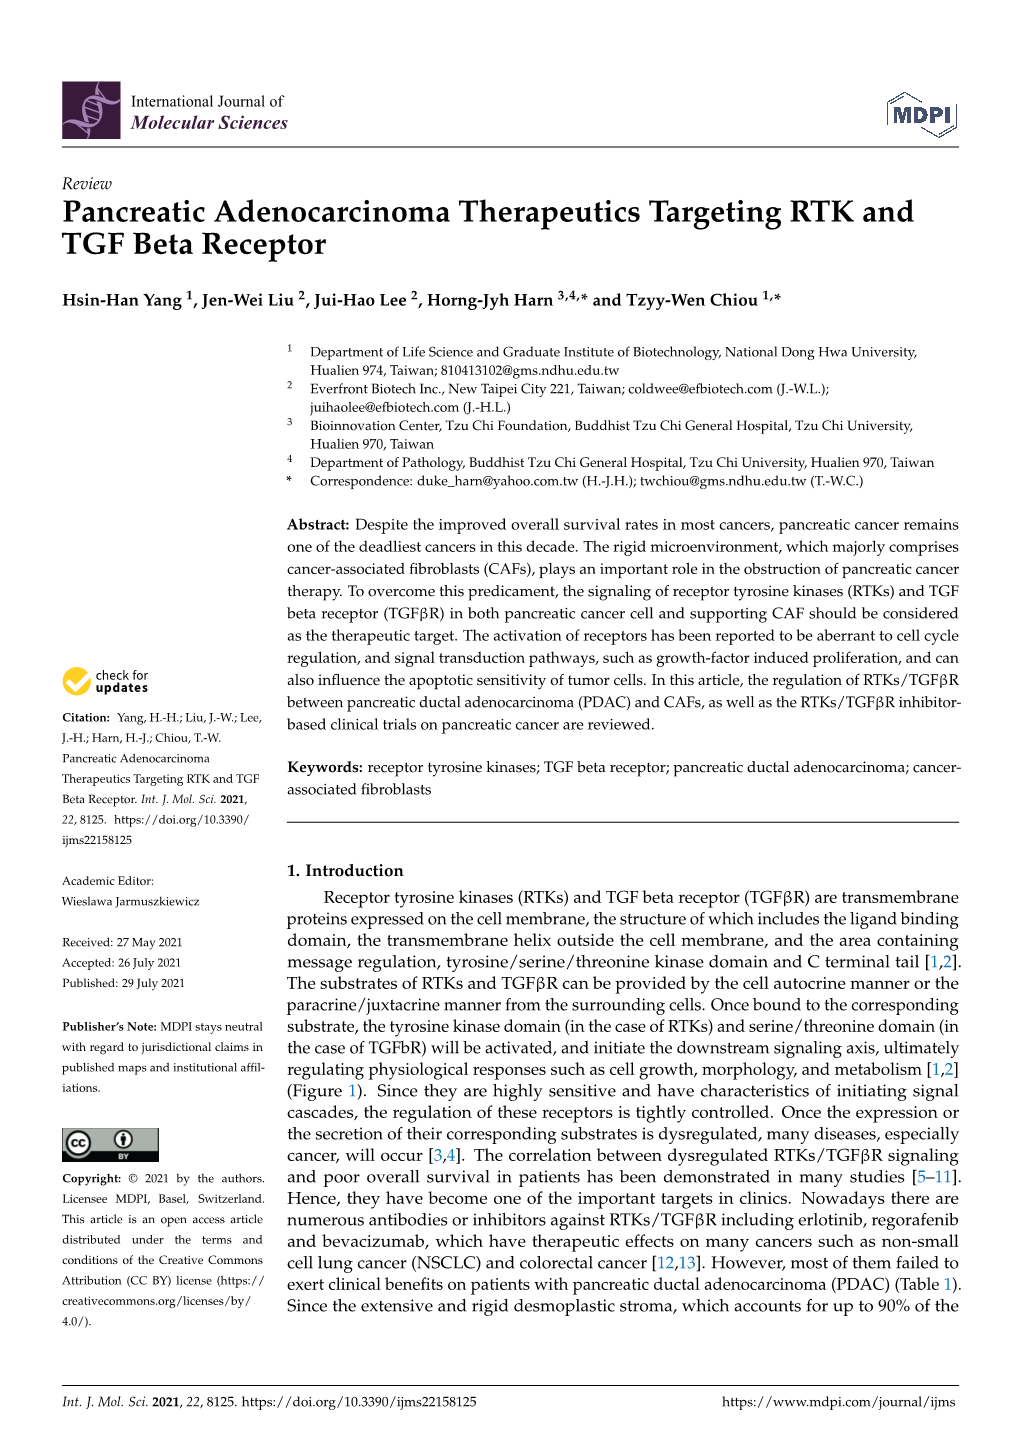 Pancreatic Adenocarcinoma Therapeutics Targeting RTK and TGF Beta Receptor